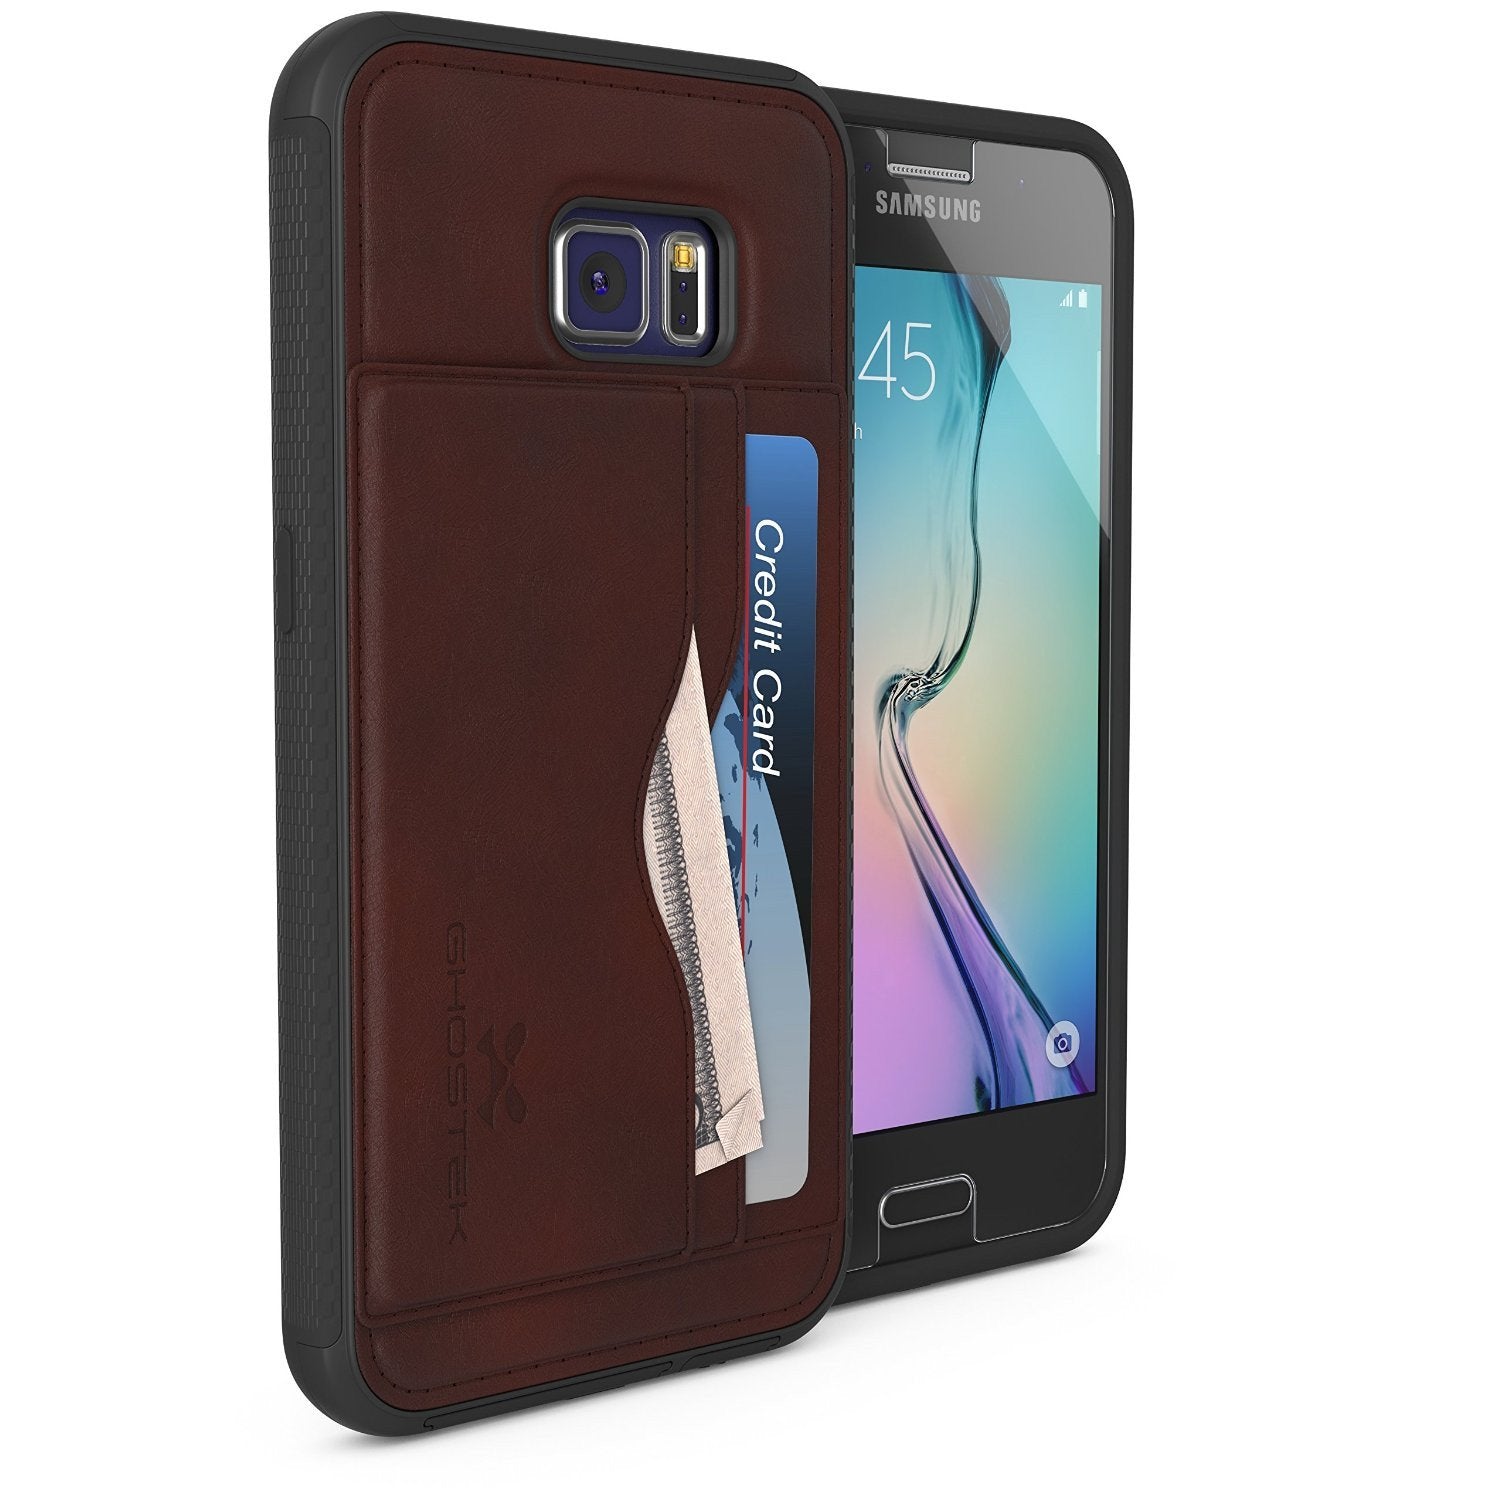 Galaxy S6 Wallet Case, Ghostek Stash Dark Brown Wallet Case w/ Tempered Glass | Lifetime Warranty